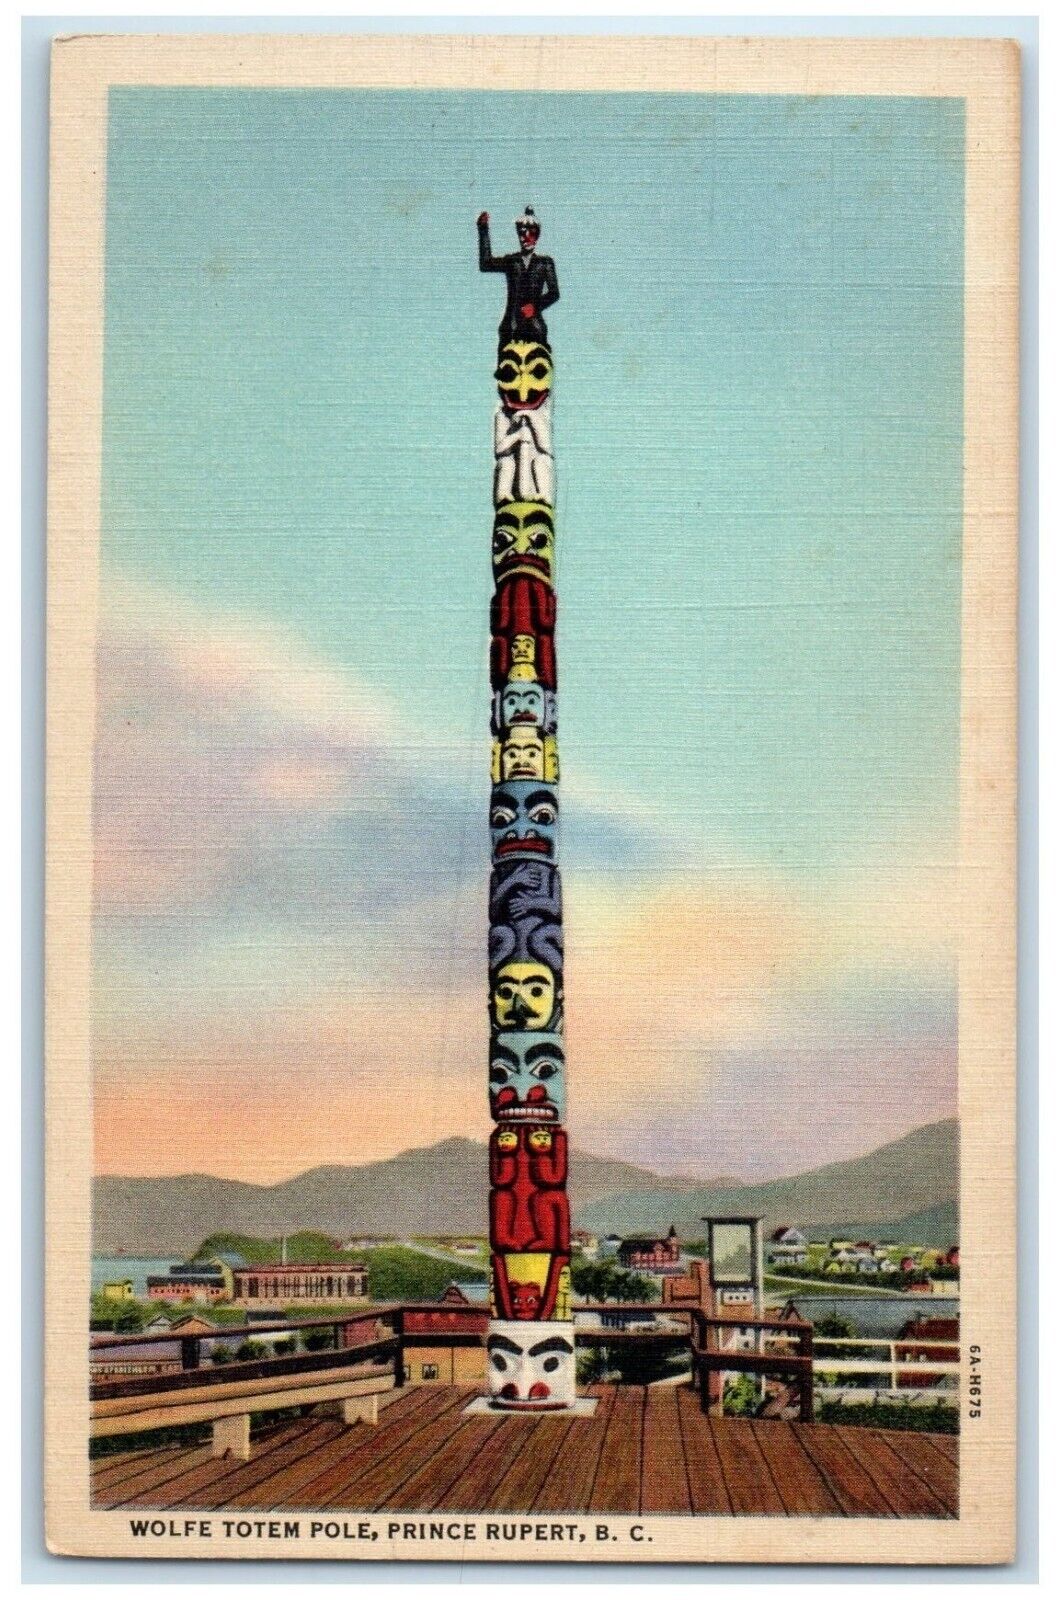 c1930's Wolfe Totem Pole Prince Rupert British Columbia Canada Vintage Postcard